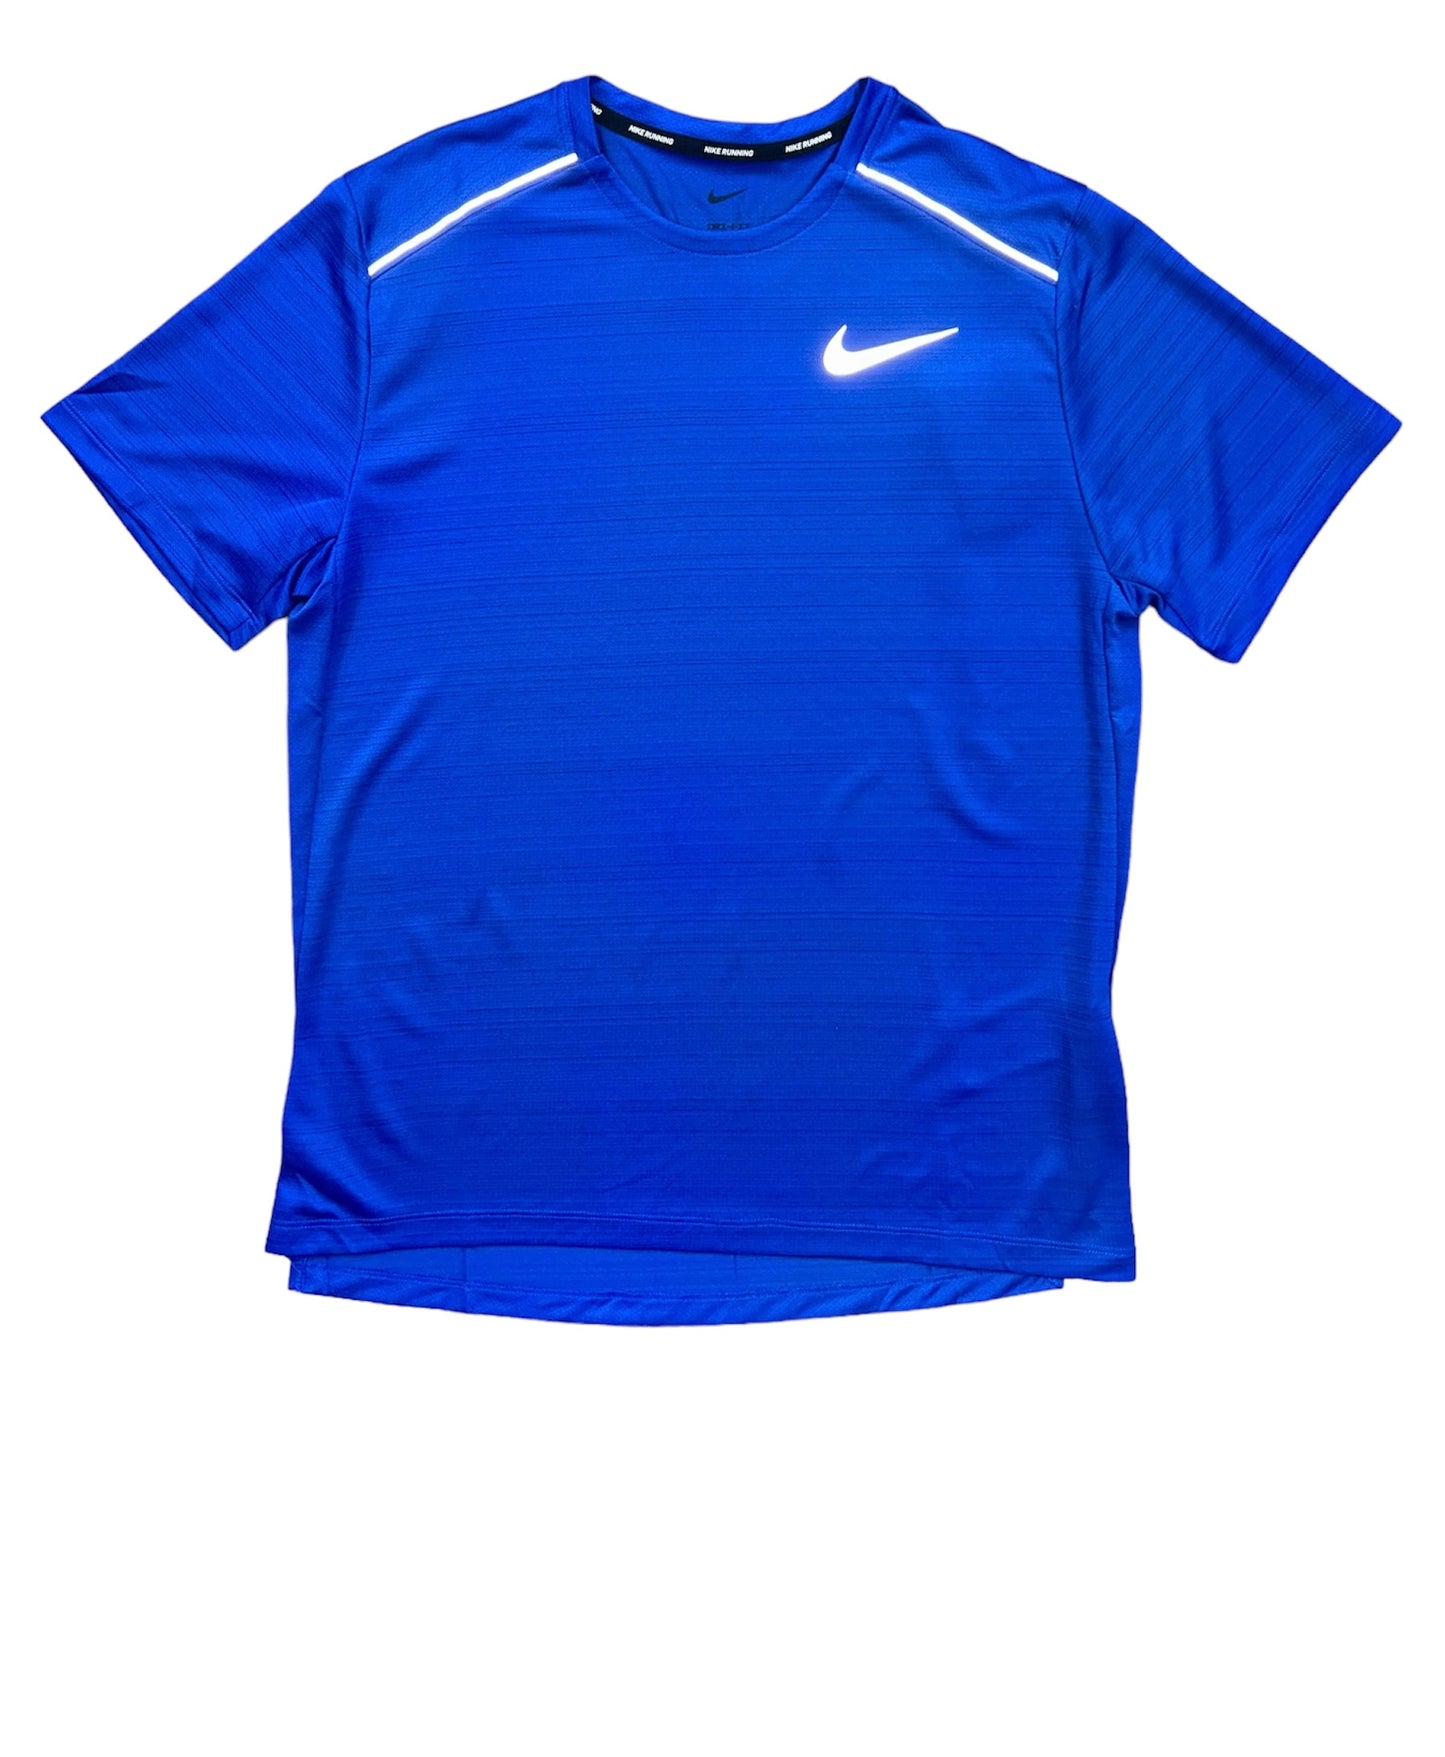 Nike miler 1.0 Royal blue